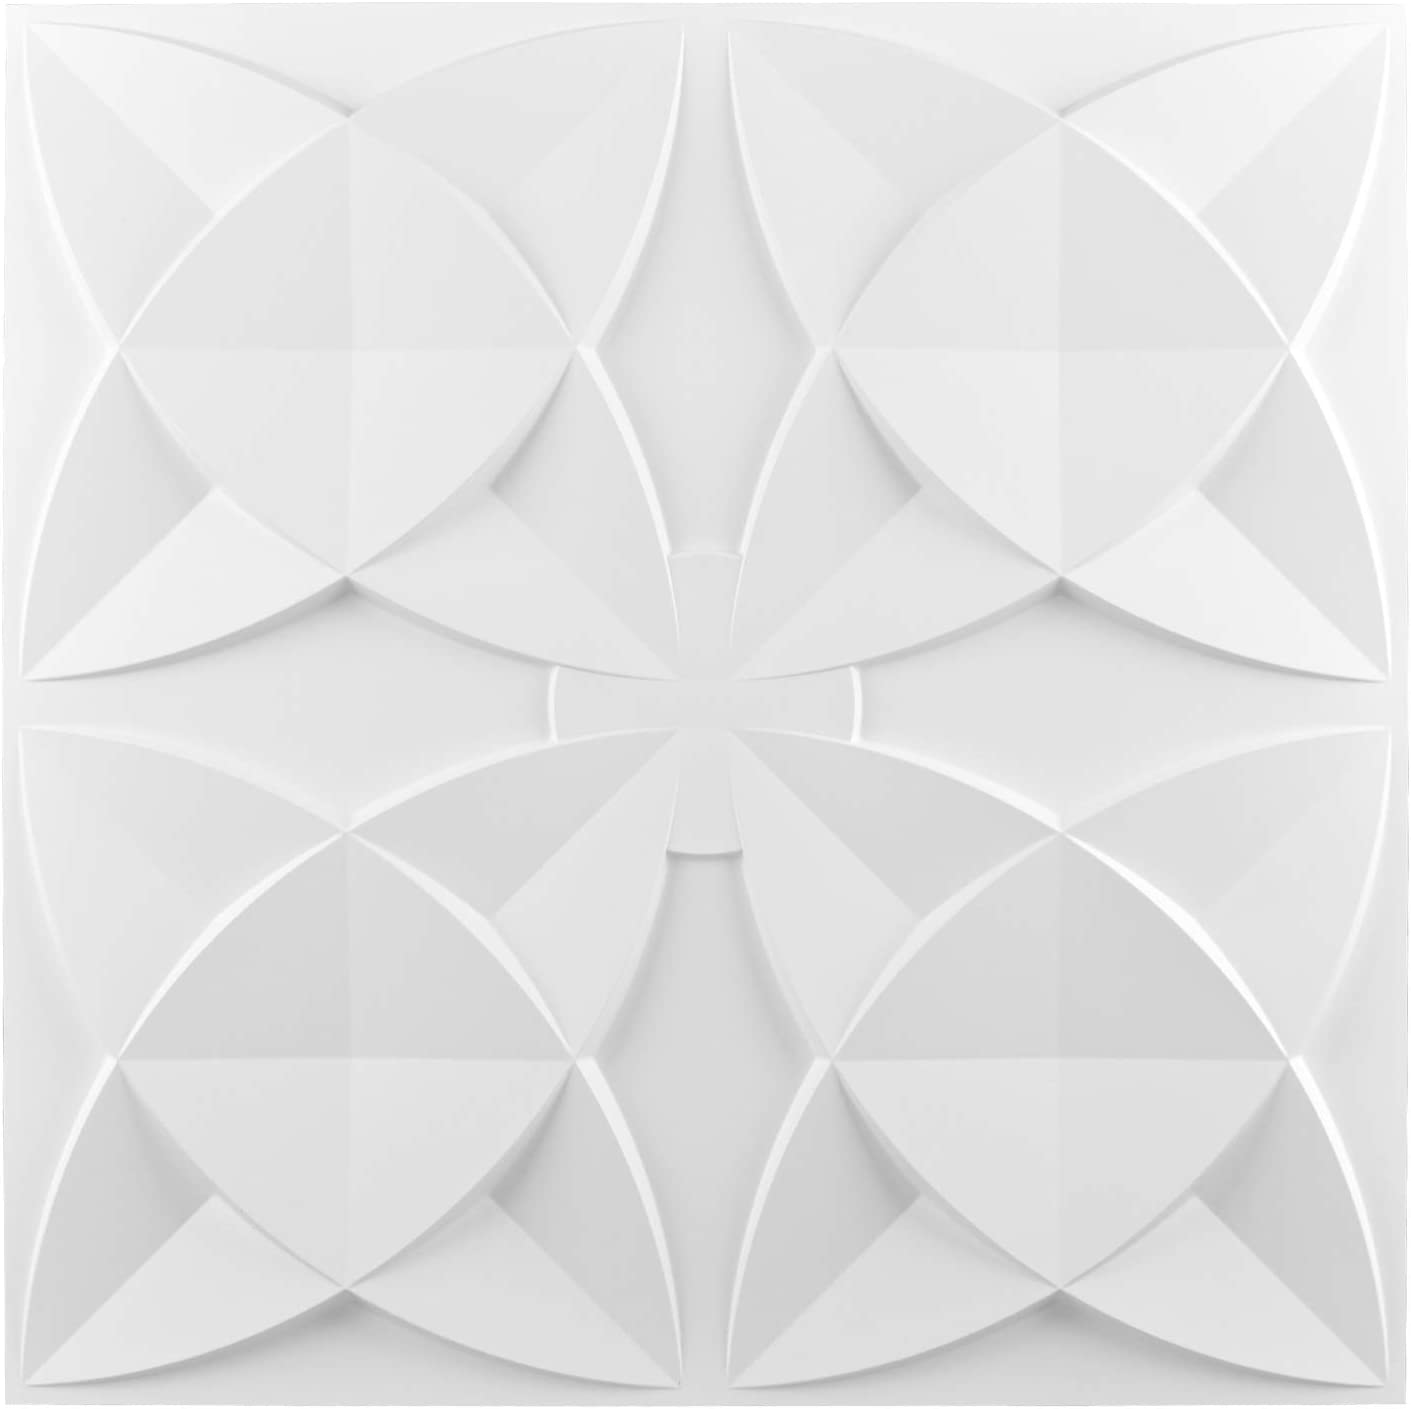 A10903P12-Art3d Decorative Ceiling Tile 2x2 Glue up, Suspended Ceiling Tile Pack of 12pcs White Floral